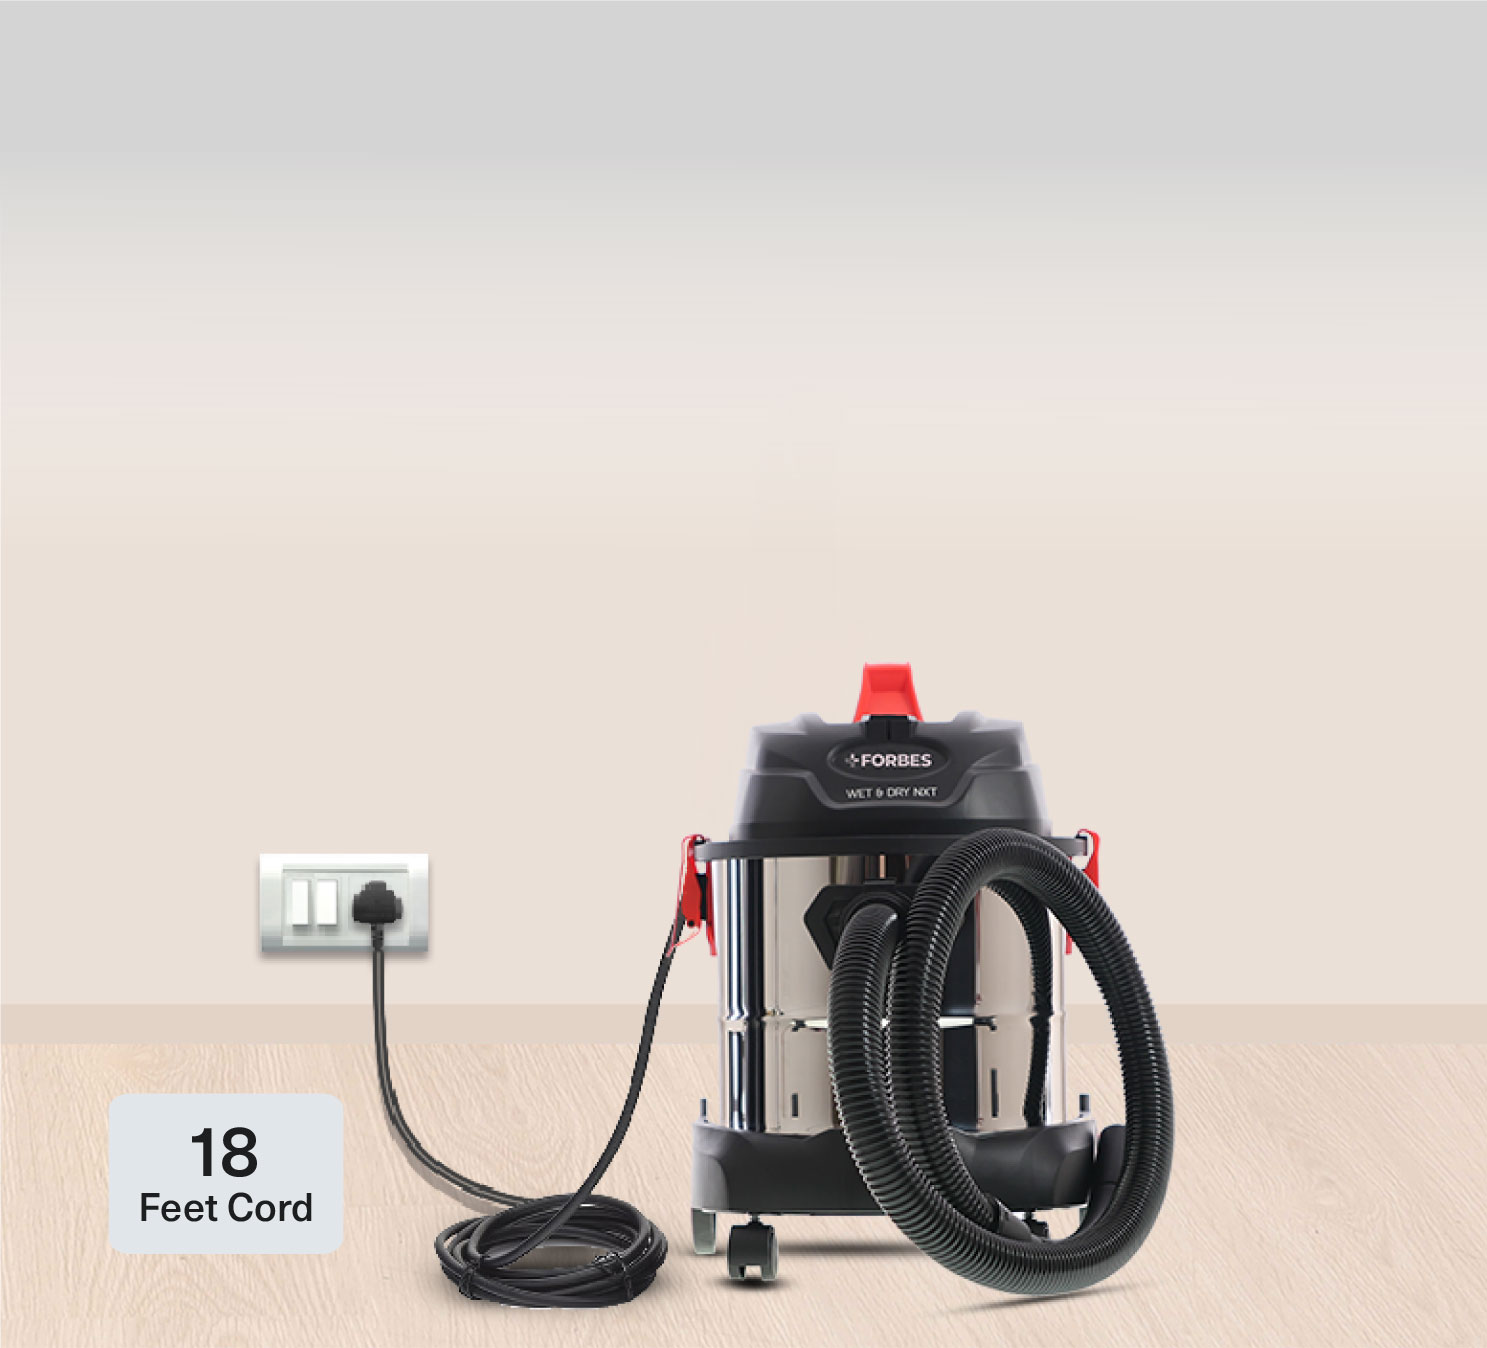 Eureka Forbes 1380 Watts Wet & Dry Vacuum Cleaner